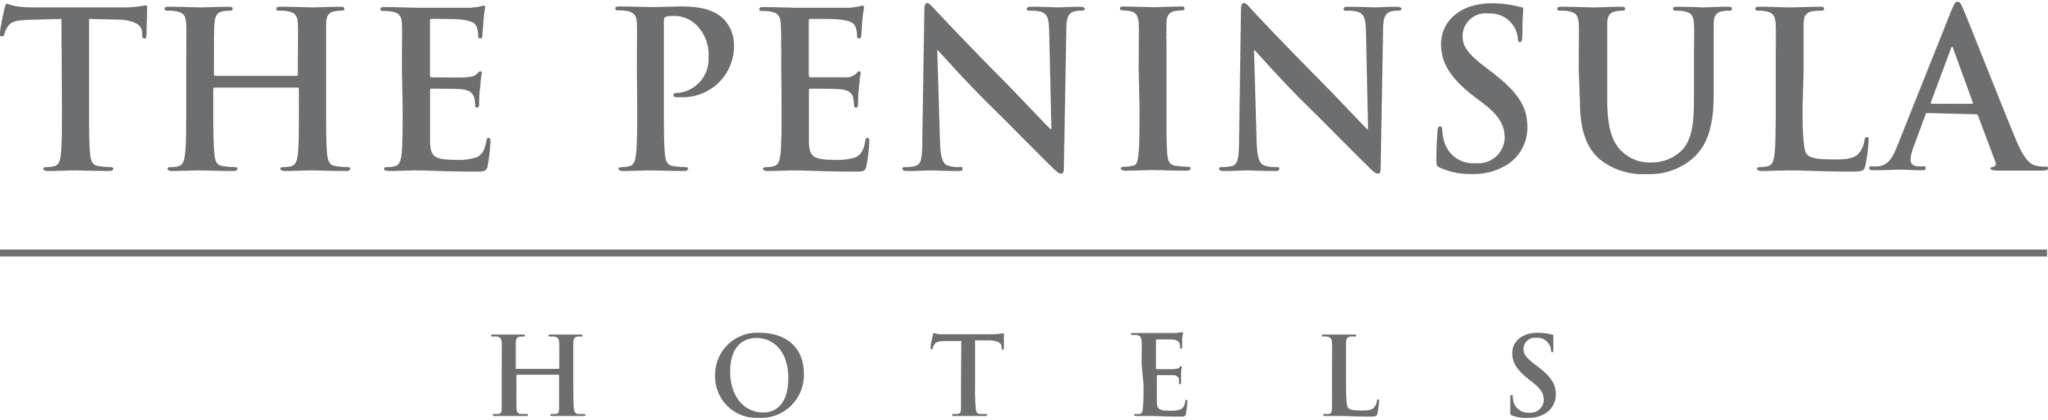 Logotipo de The Peninsula Hotels